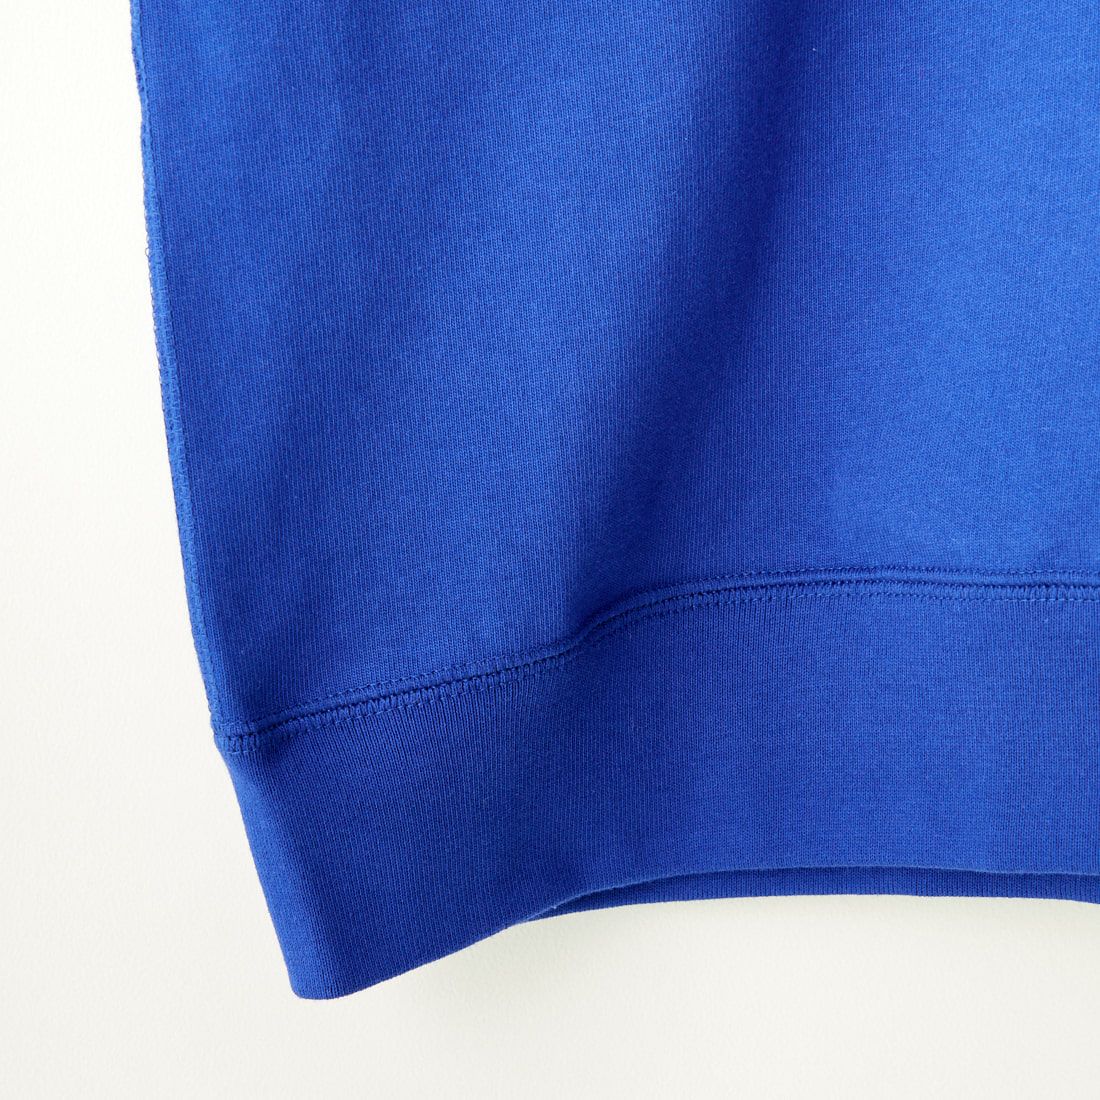 Gymphlex [ジムフレックス] ロゴ刺繍 ロングスリーブTシャツ [GY-C0102HWJ] BLUE